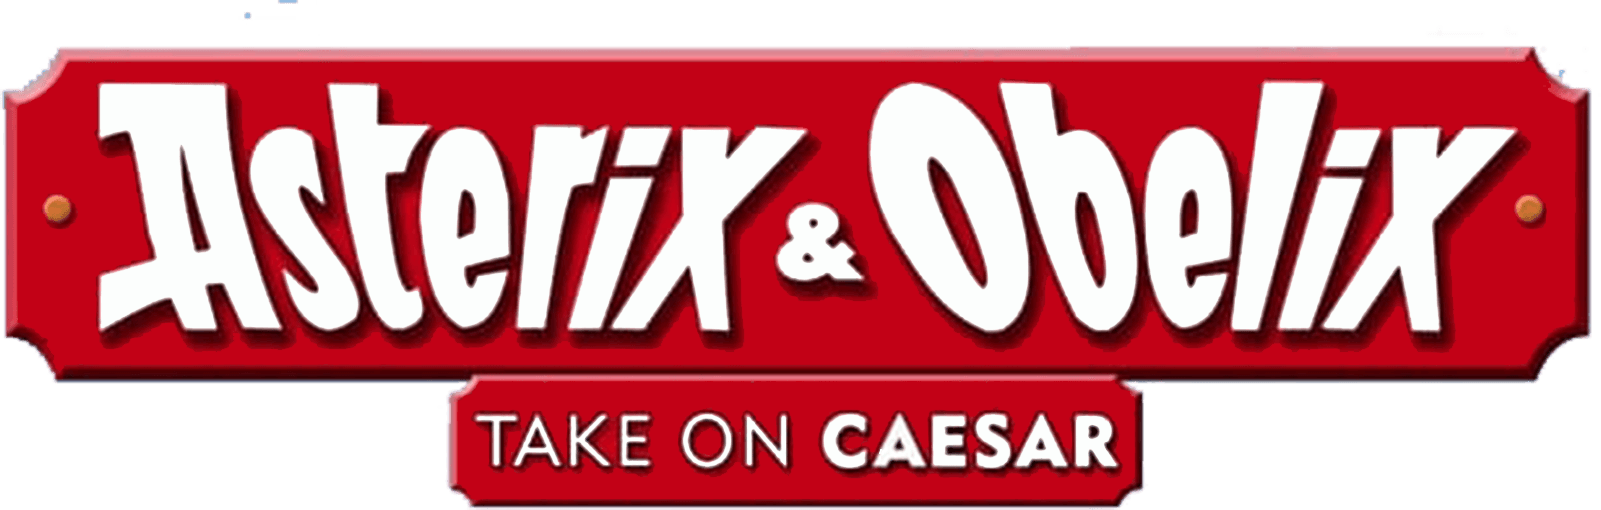 Asterix & Obelix Take on Caesar logo